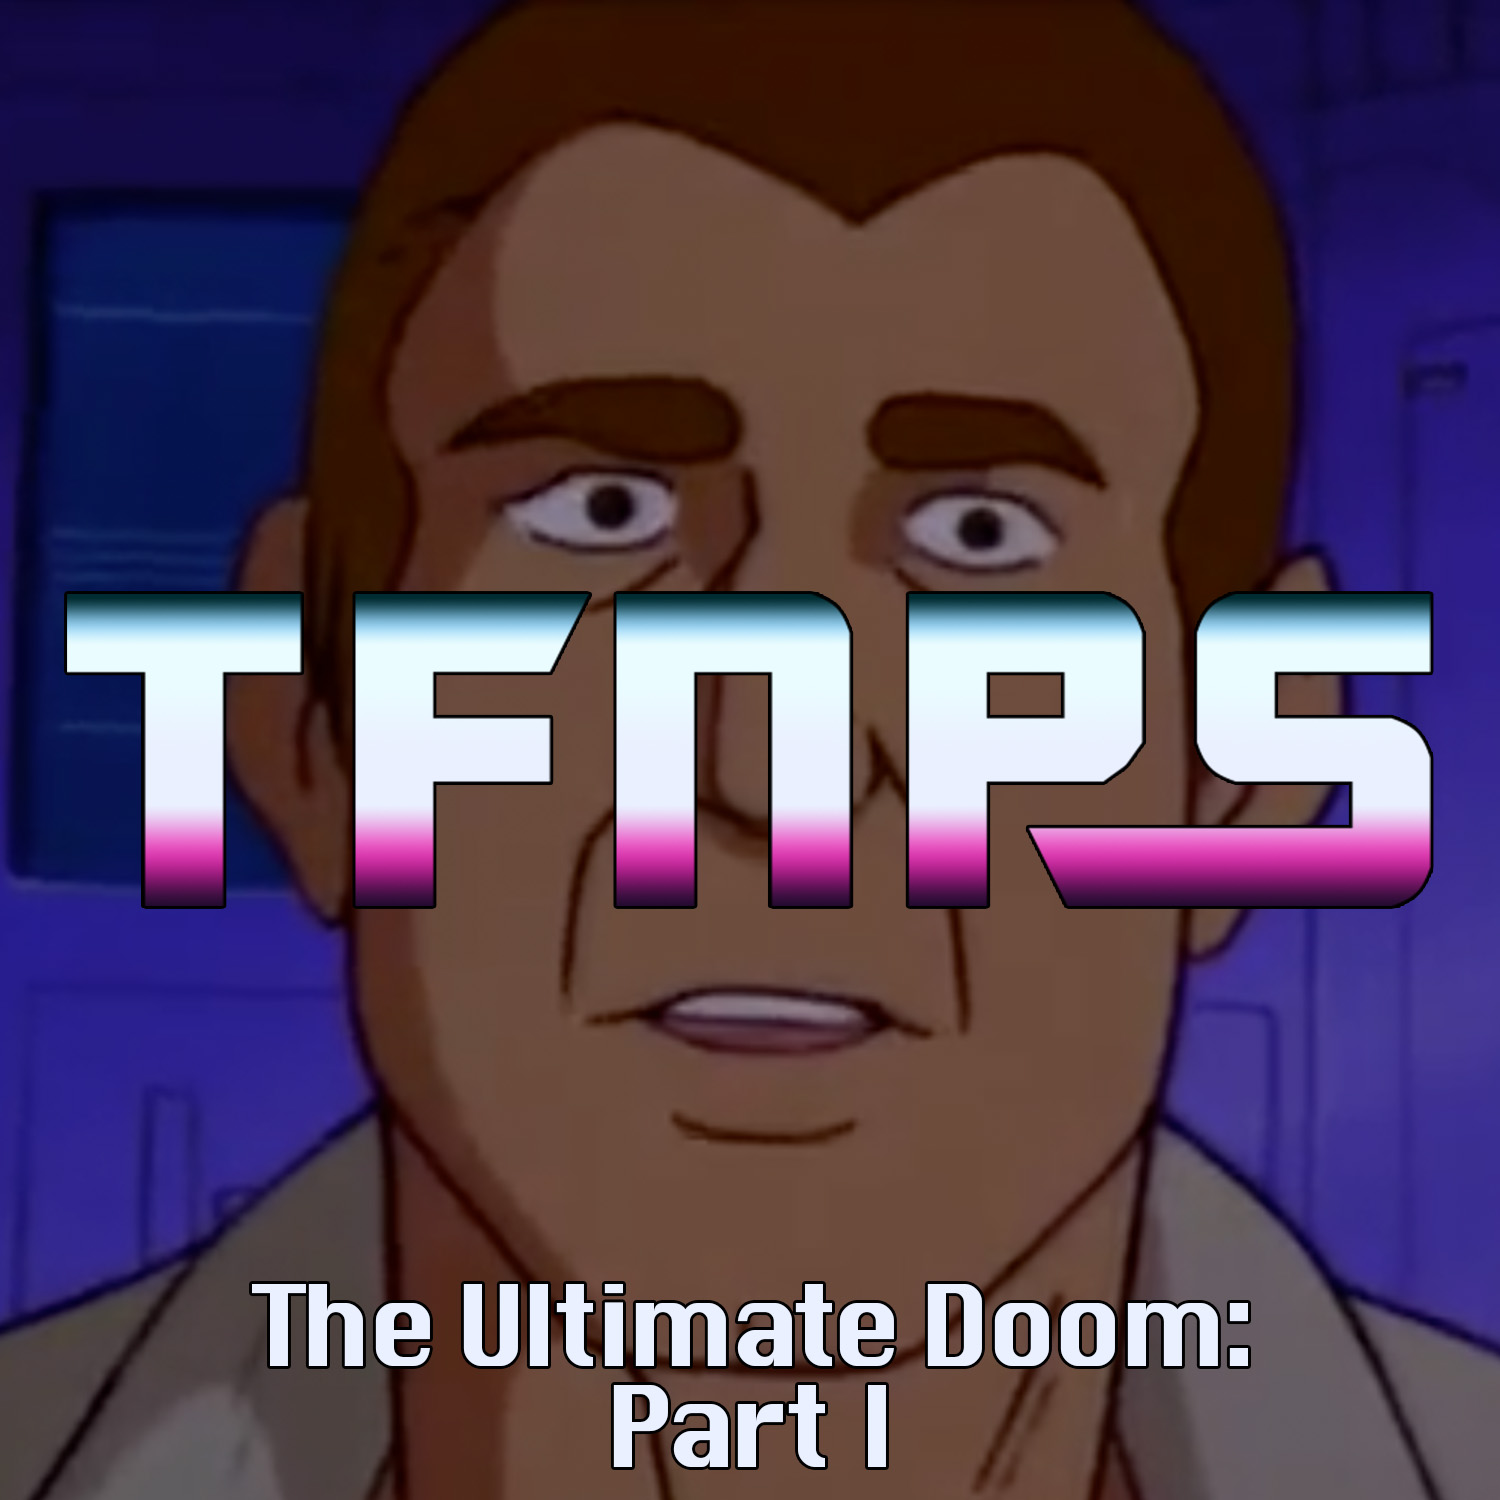 The Ultimate Doom Part I: Brainwash